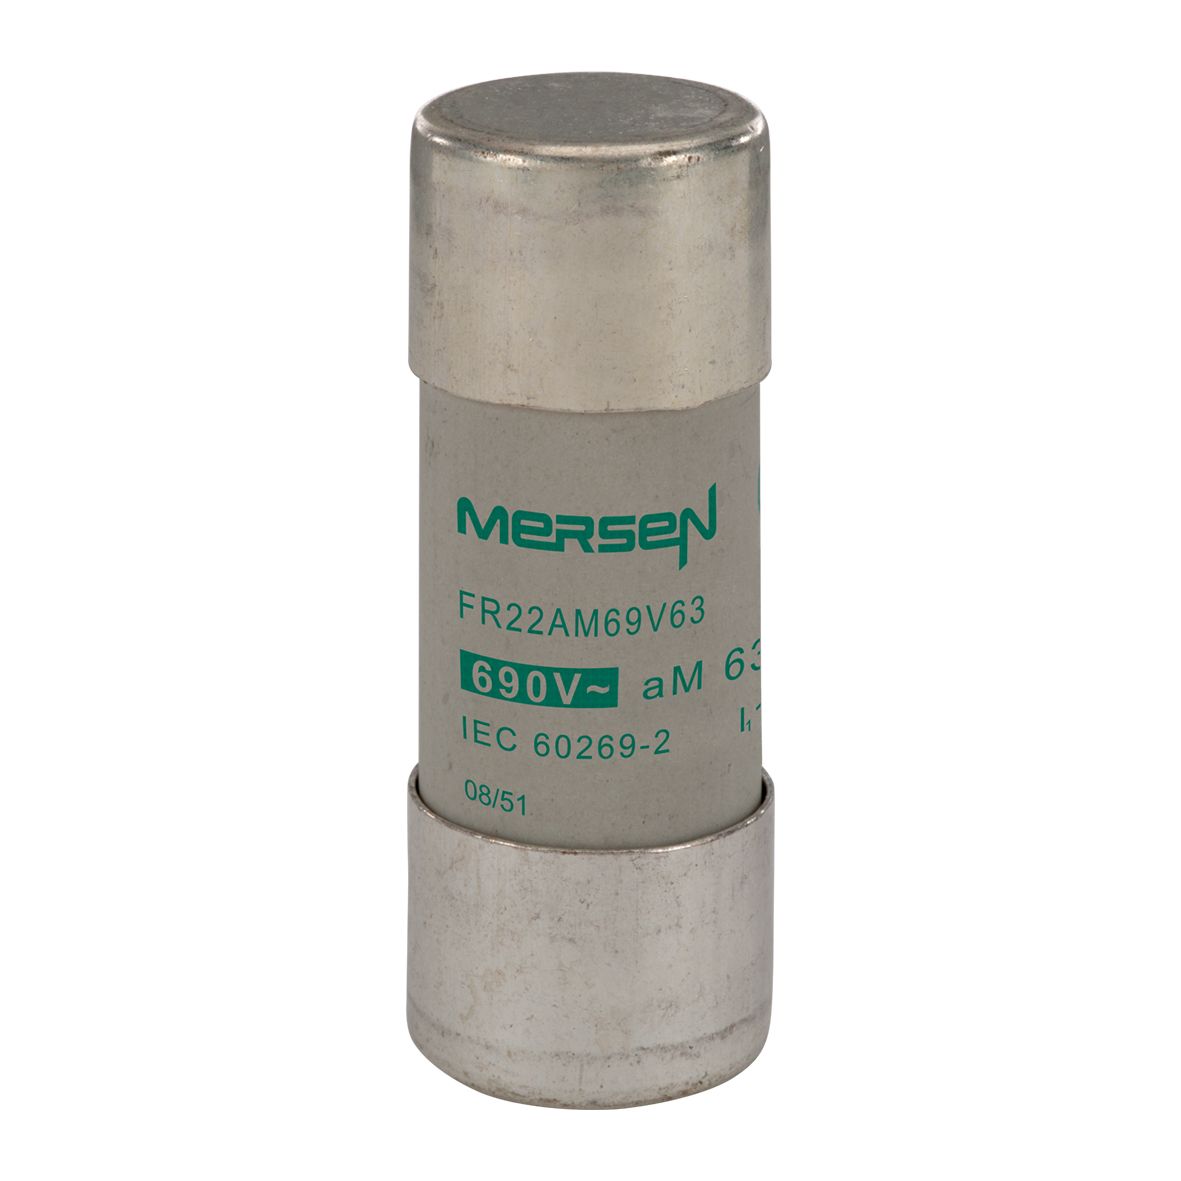 C215650 - Cylindrical fuse-link aM 690VAC 22.2x58, 63A